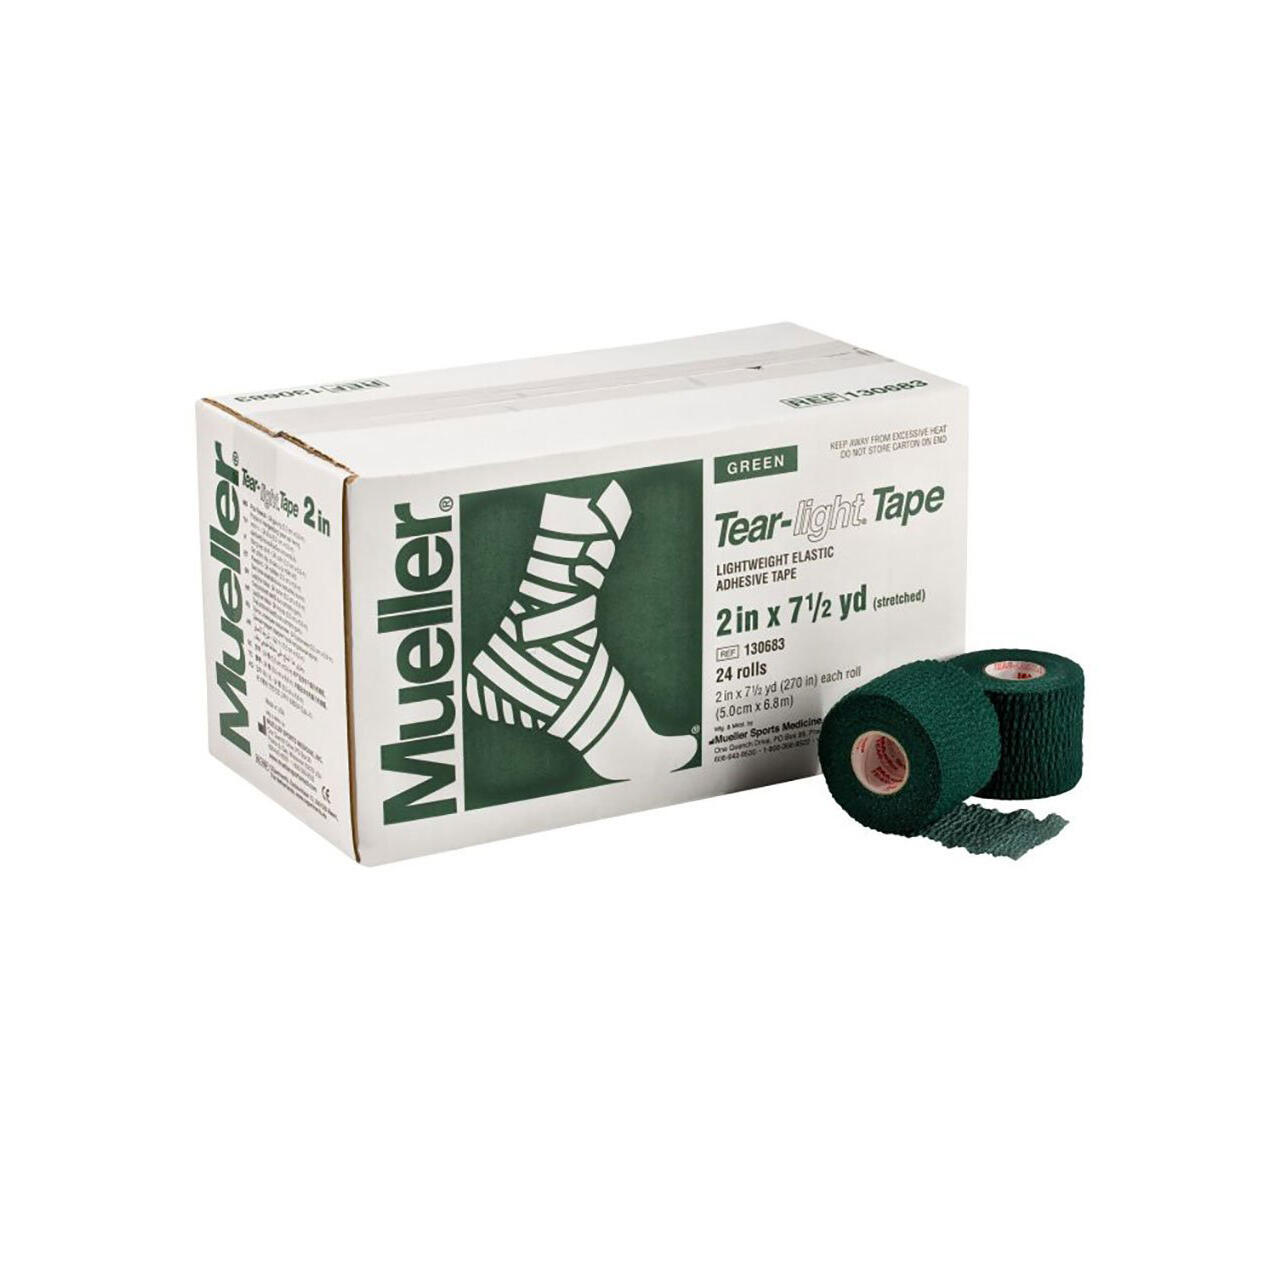 Mueller Muscle Support Tear-Light Tape Green 5cm x 6.8m - 24 Rolls 2/2